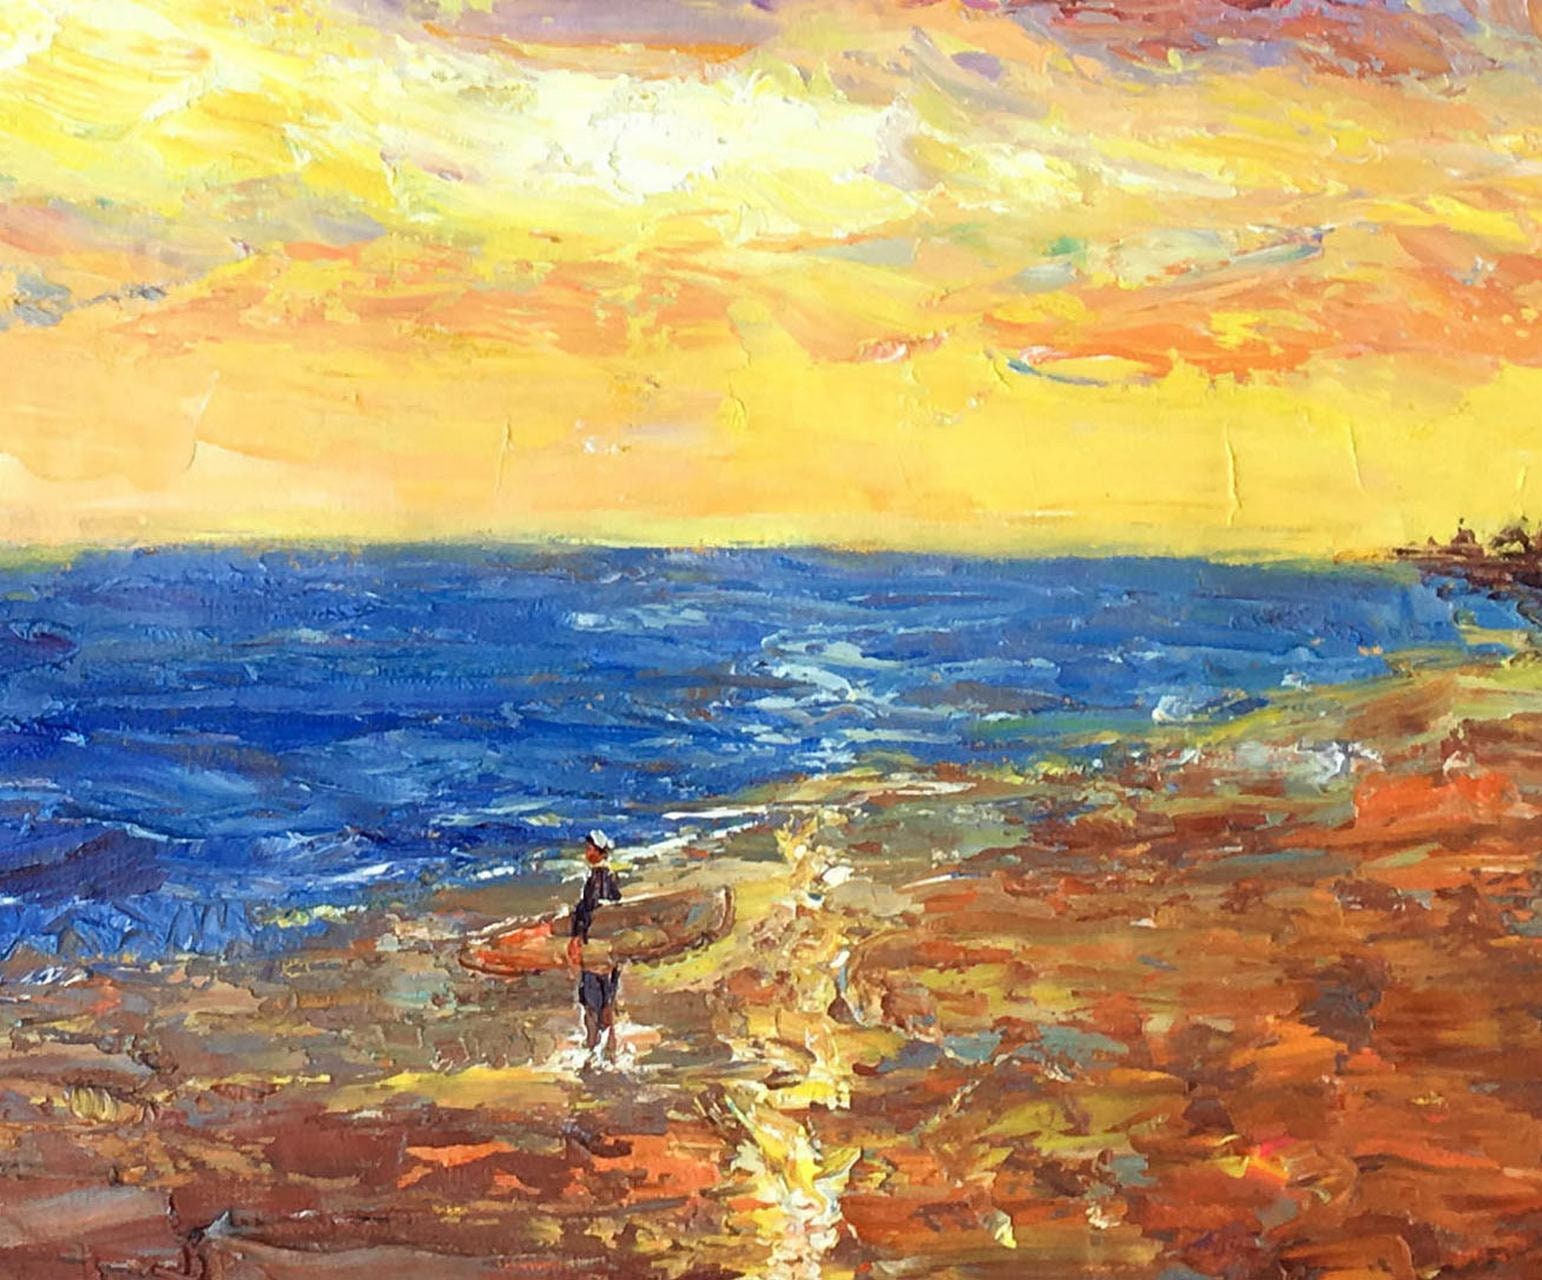 Oil Painting Seascape Beach Sunset, Canvas Art, Abstract Oil Painting, Large Art, Landscape Painting, Kitchen Wall Decor, Original Artwork